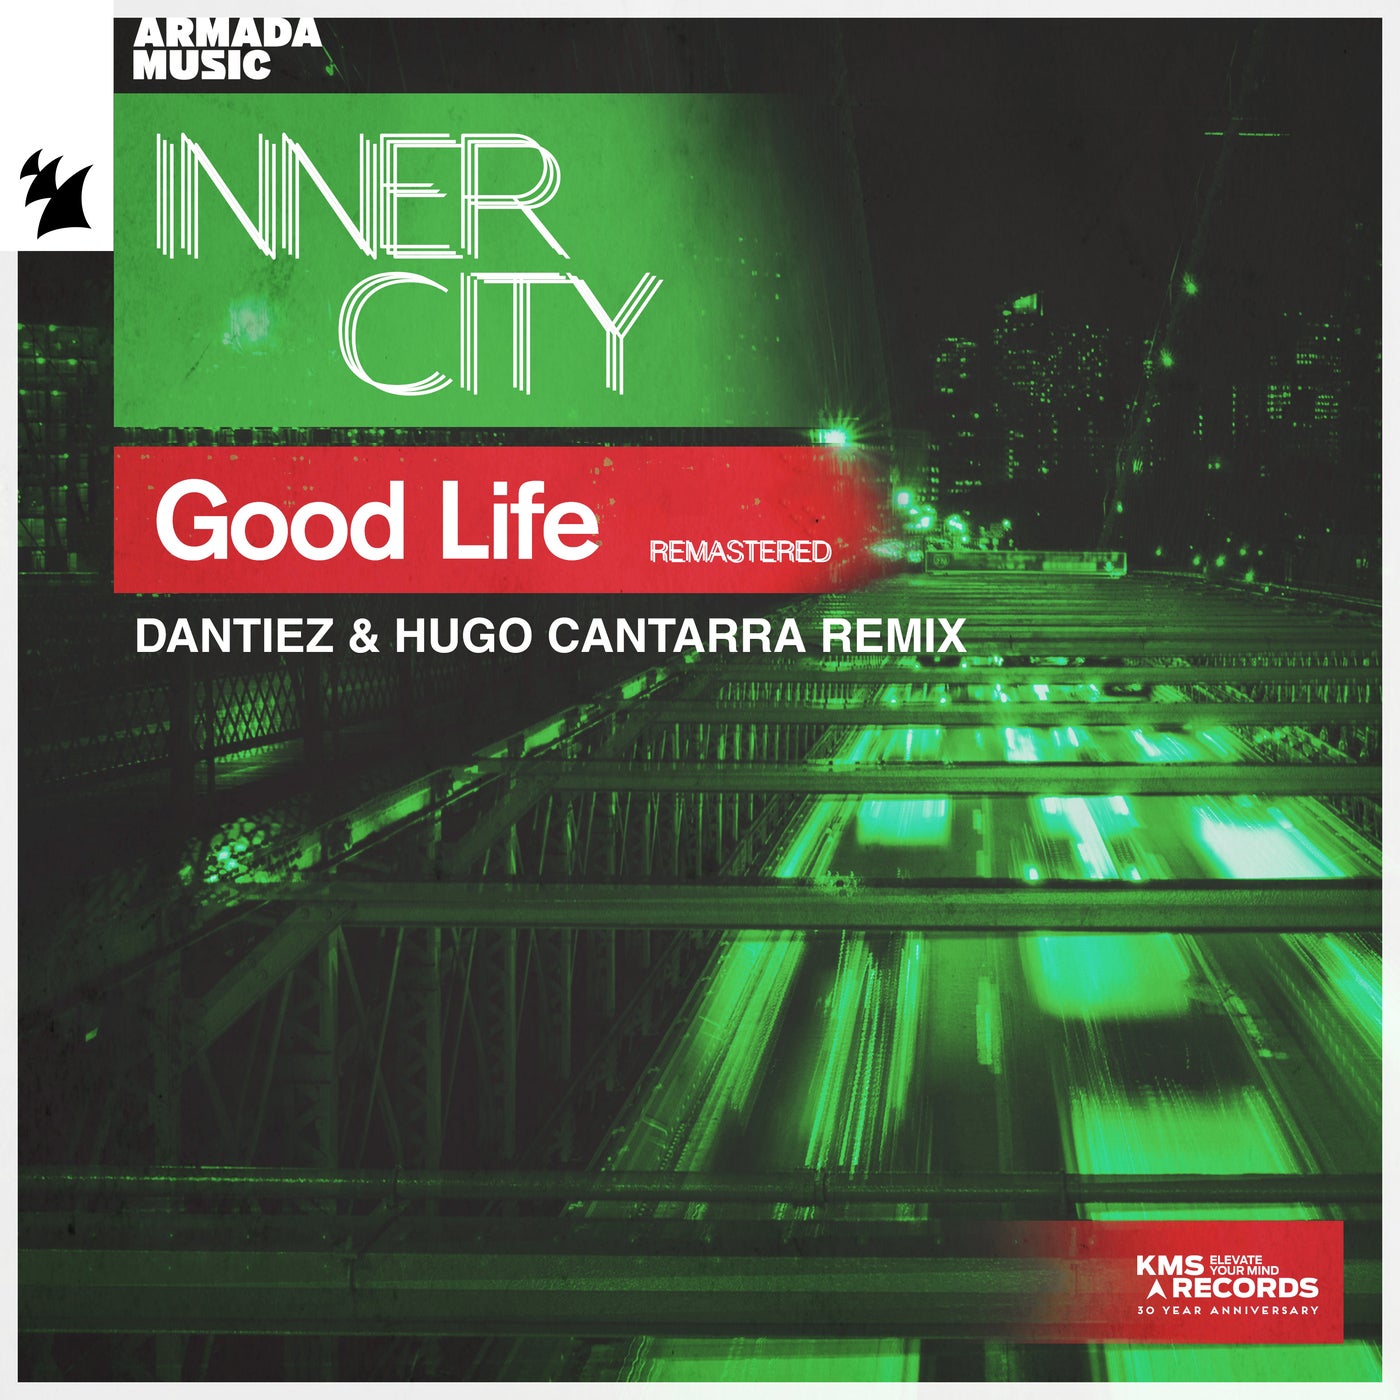  Good Life (Remastered) - Dantiez & Hugo Cantarra Remix Download Free on Electrobuzz